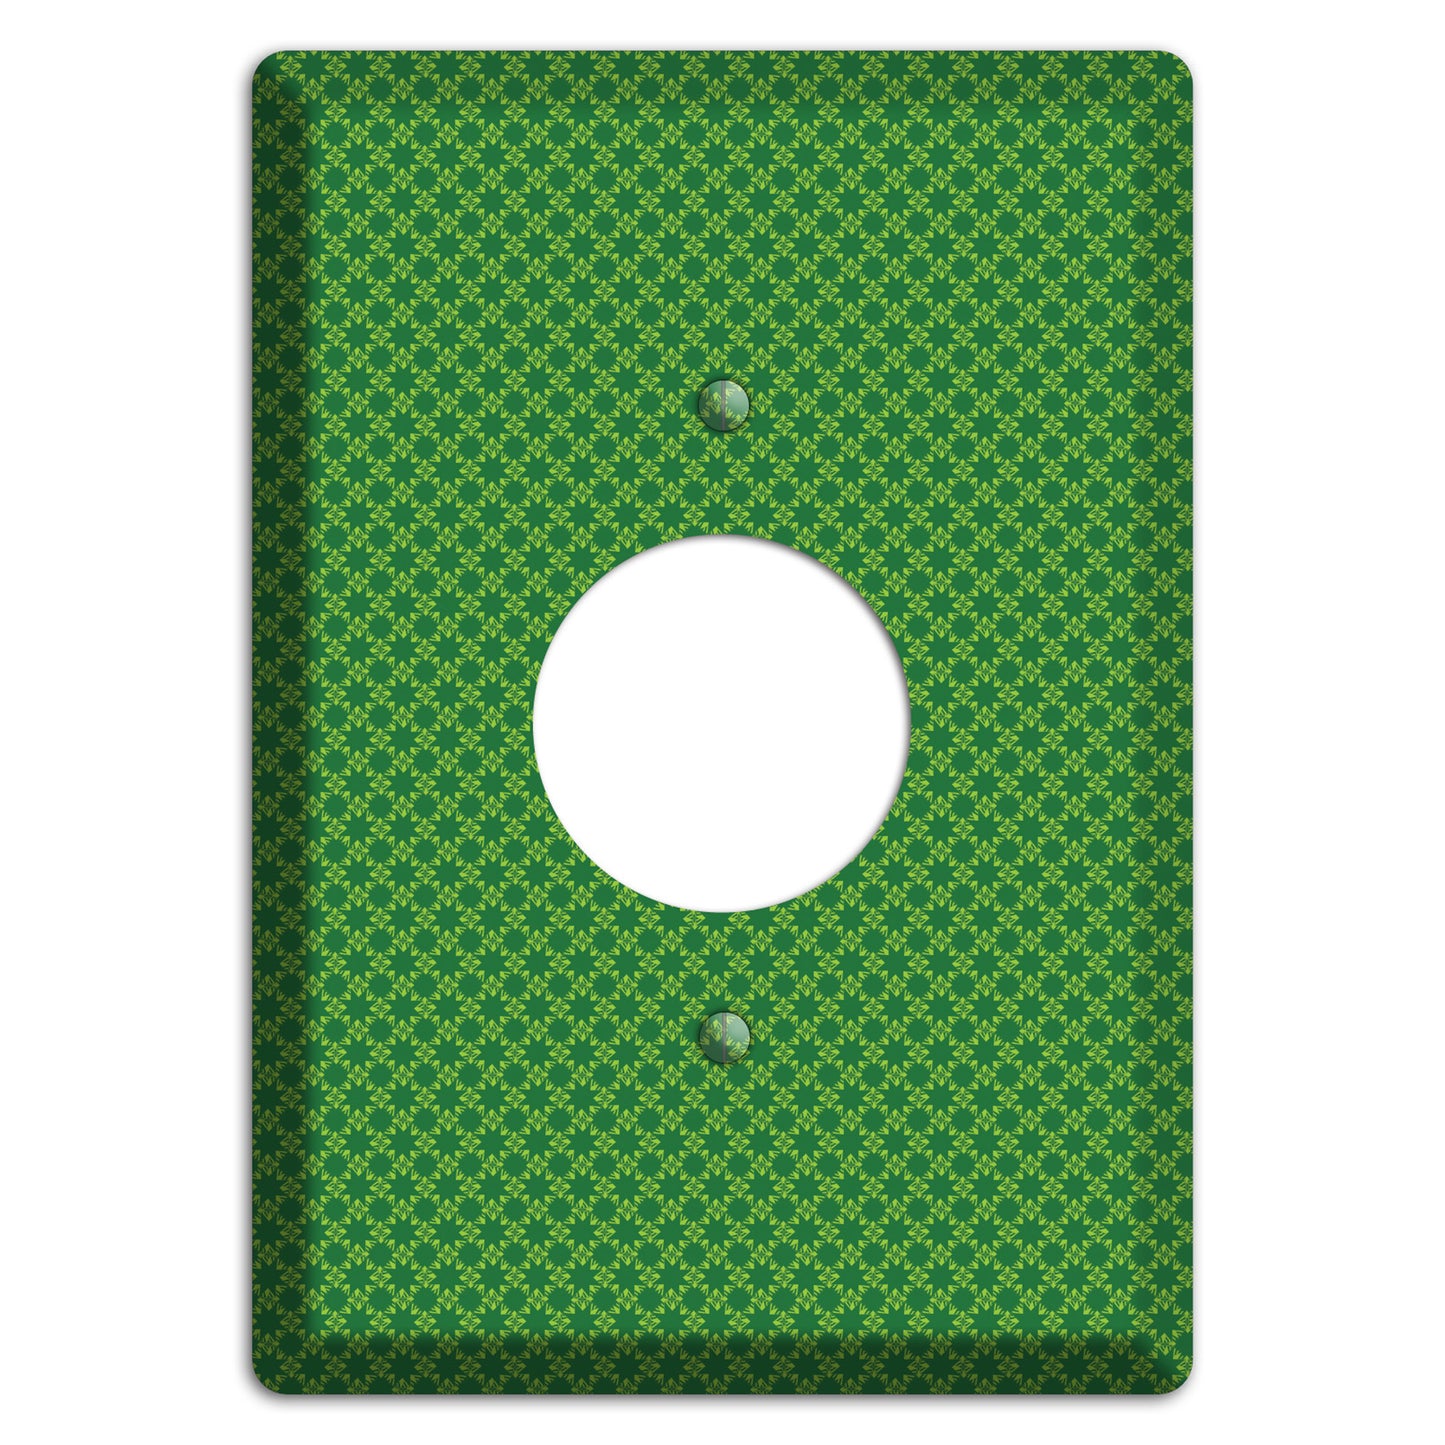 Multi Green Tiny Checked Foulard Single Receptacle Wallplate